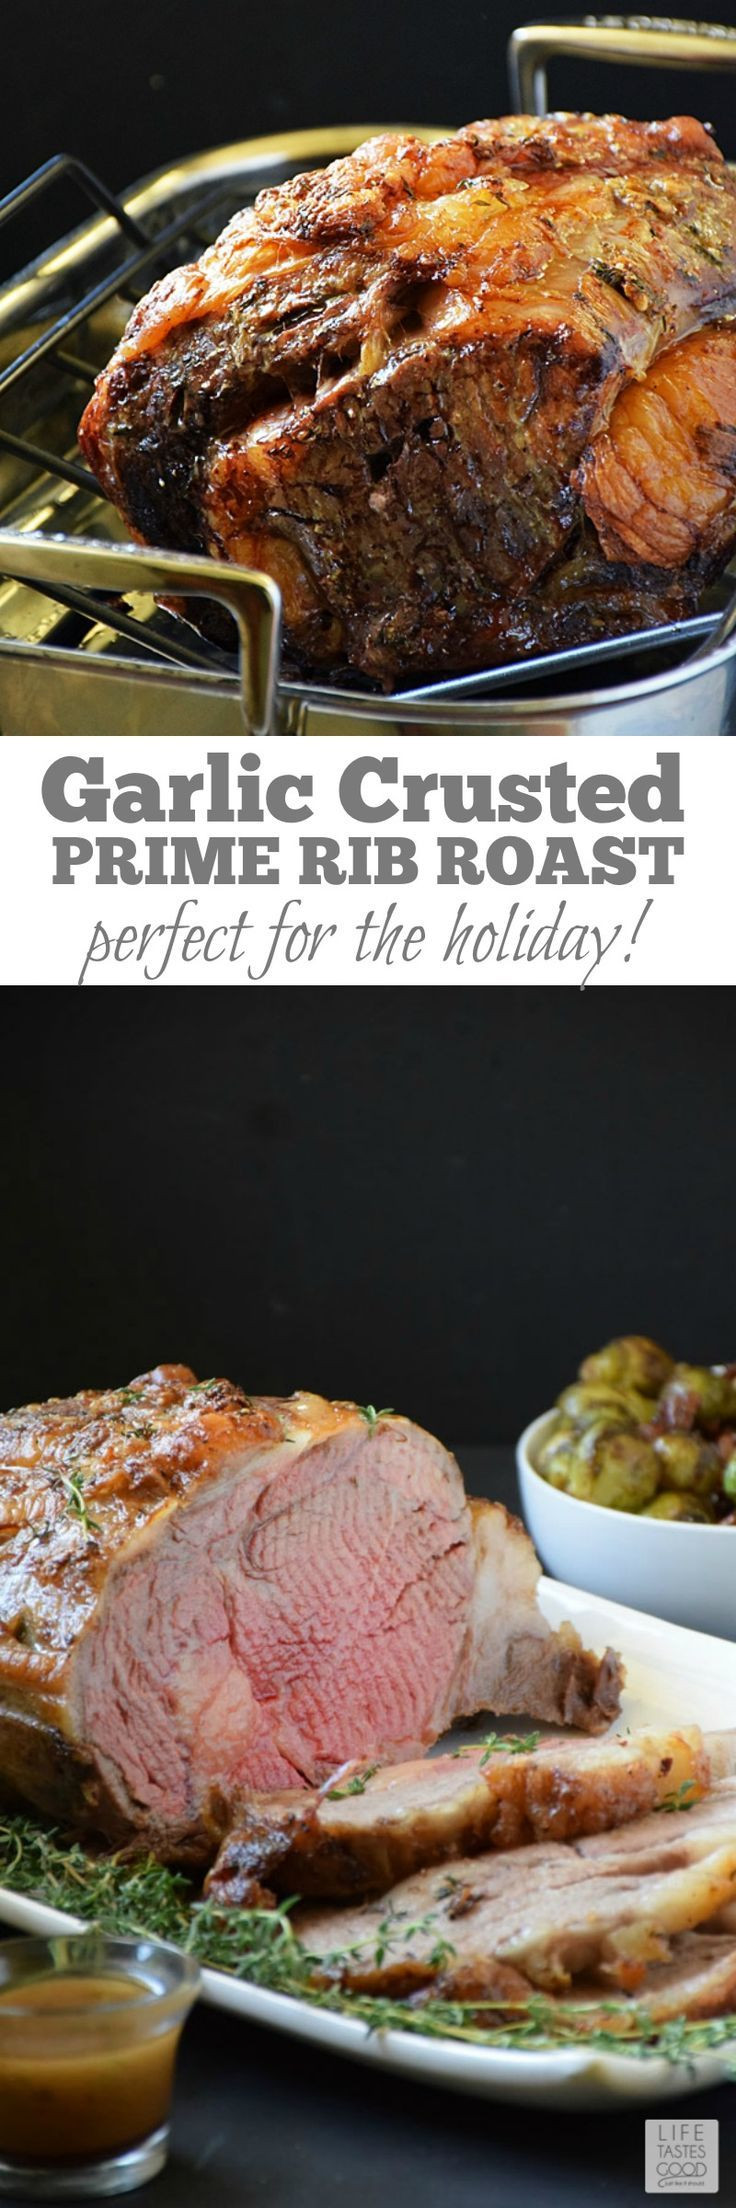 Prime Rib Dinner Ideas
 Garlic Crusted Prime Rib Roast